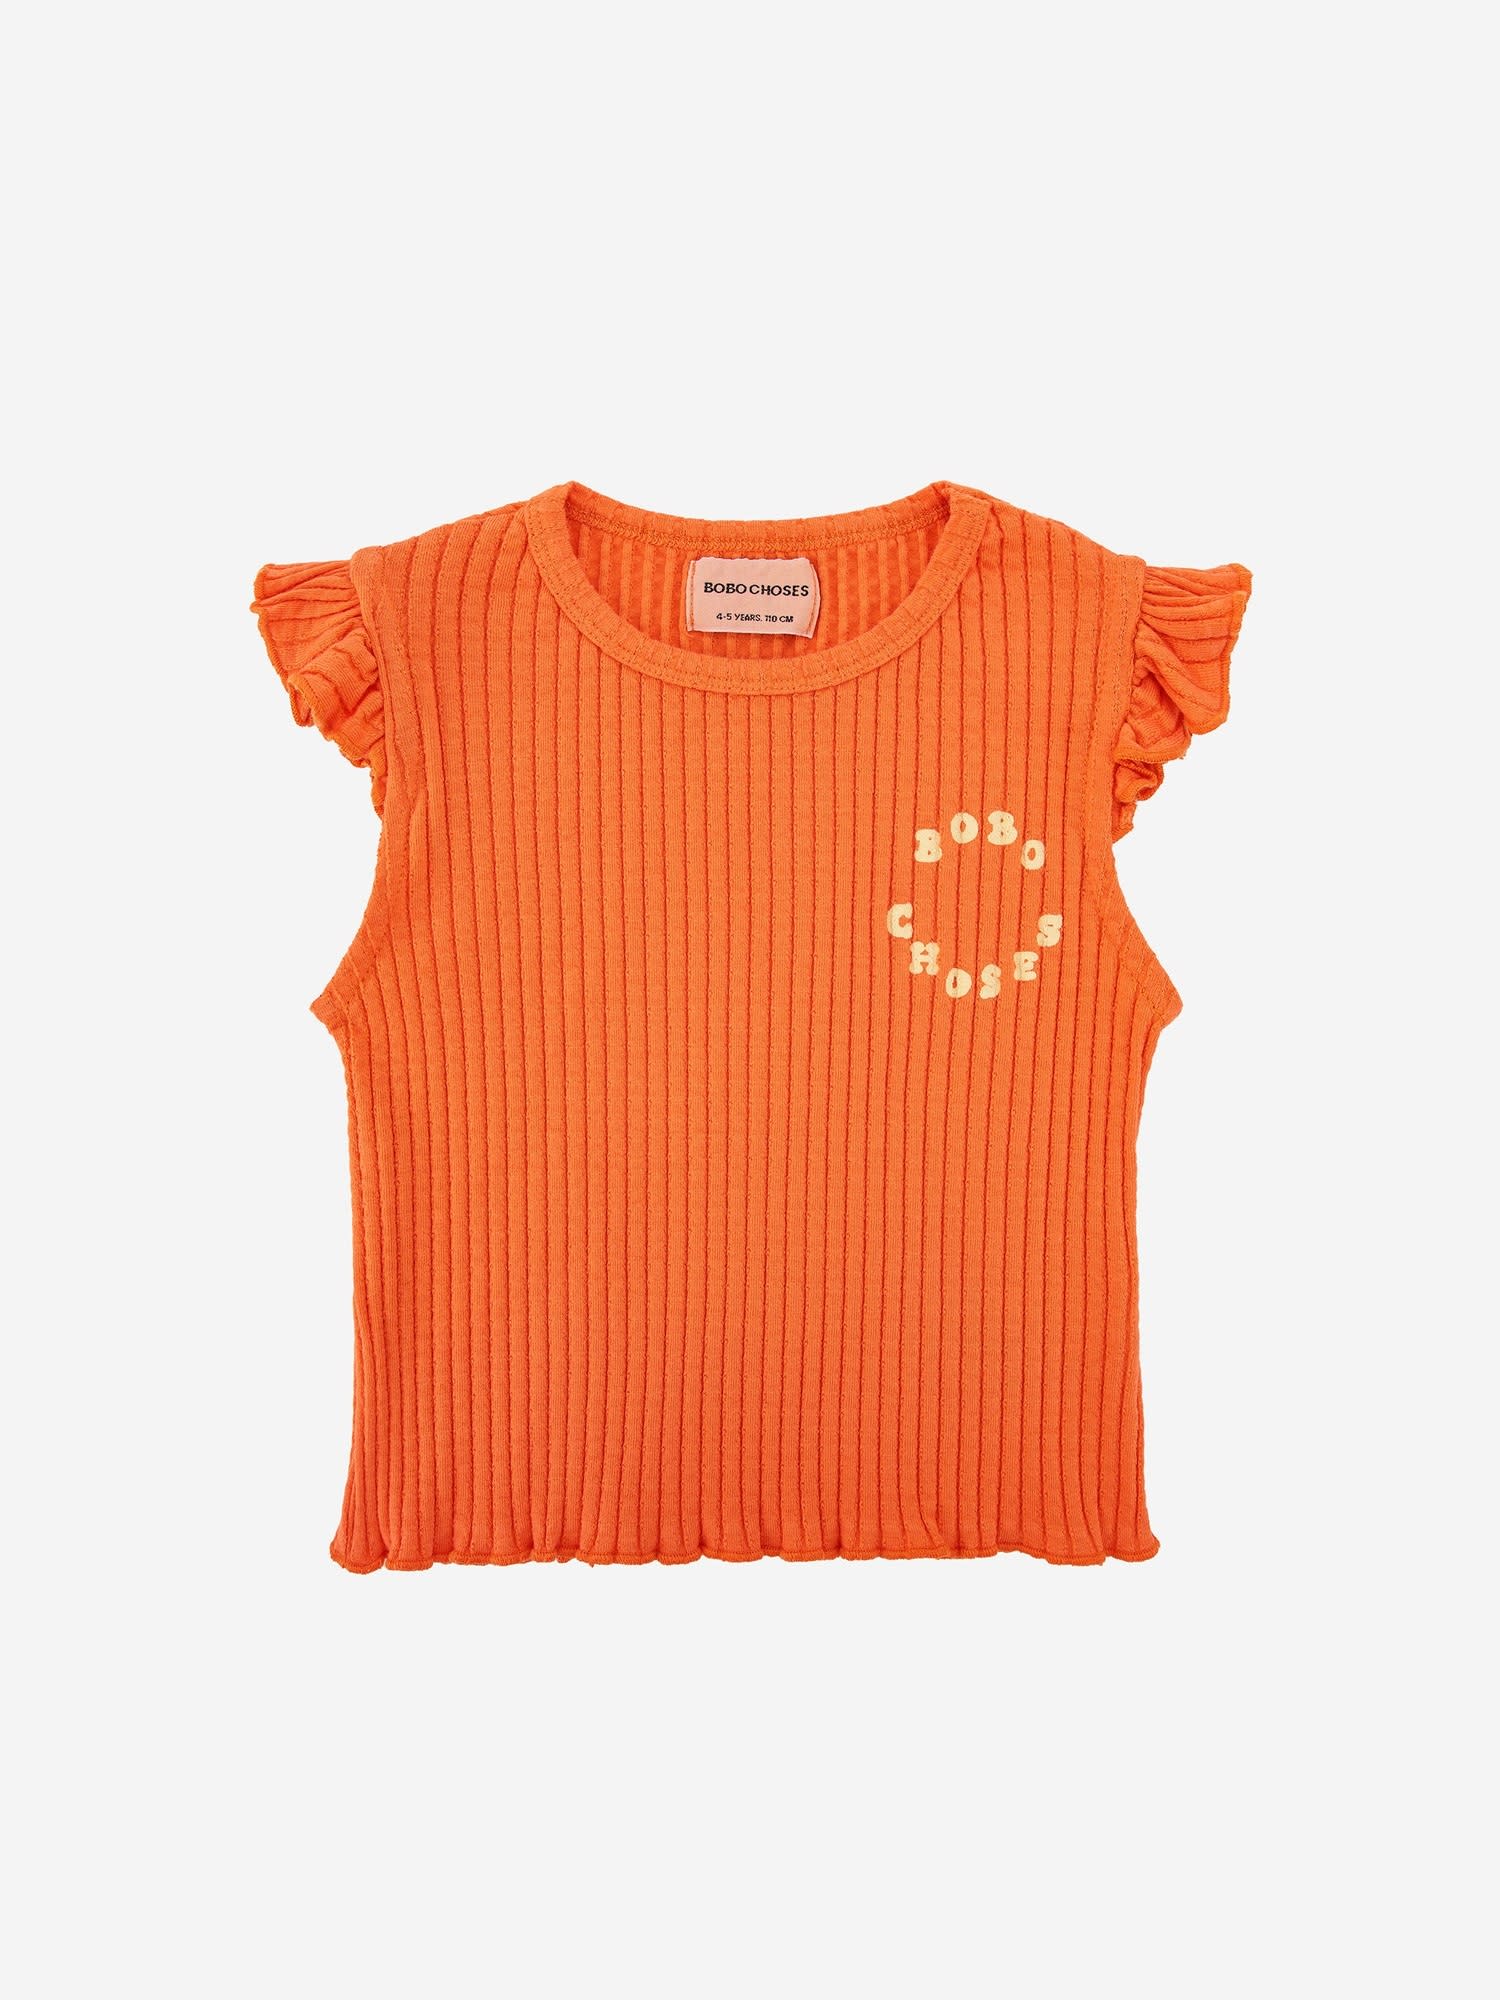 Bobo Choses Kids' Orange Top For Girl With Logo